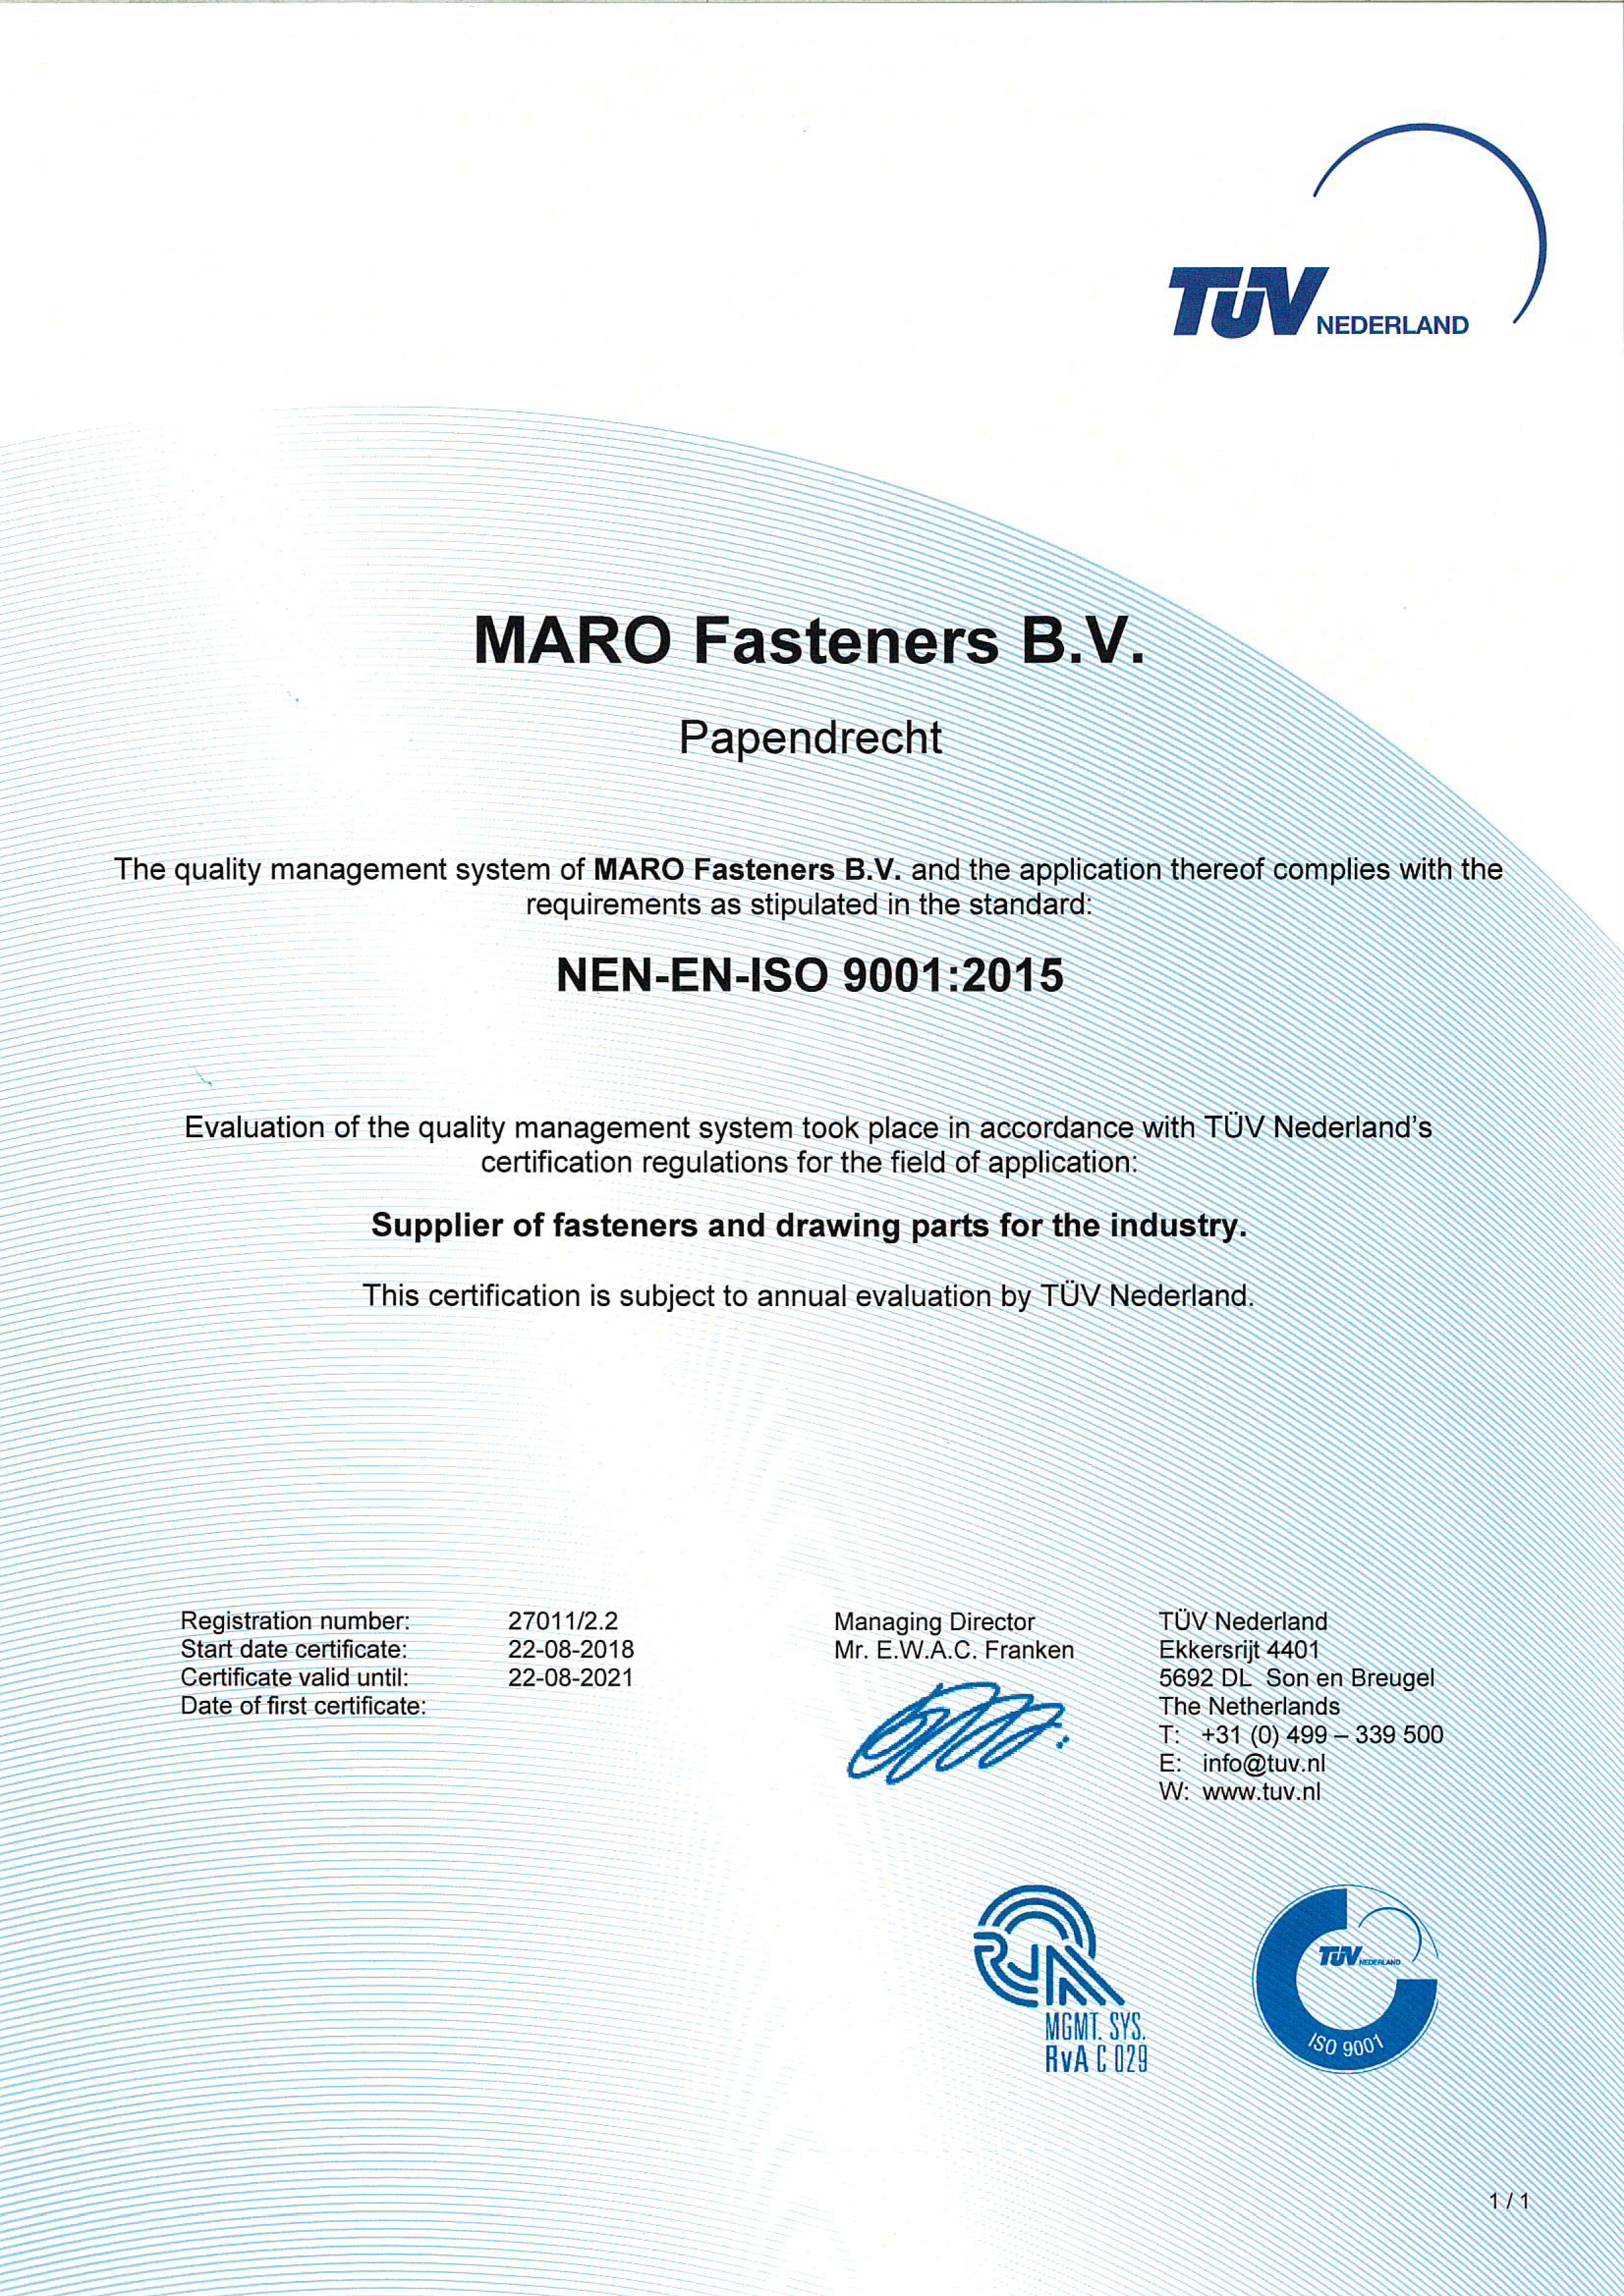 NEN-EN-ISO-9001-2015 certificate